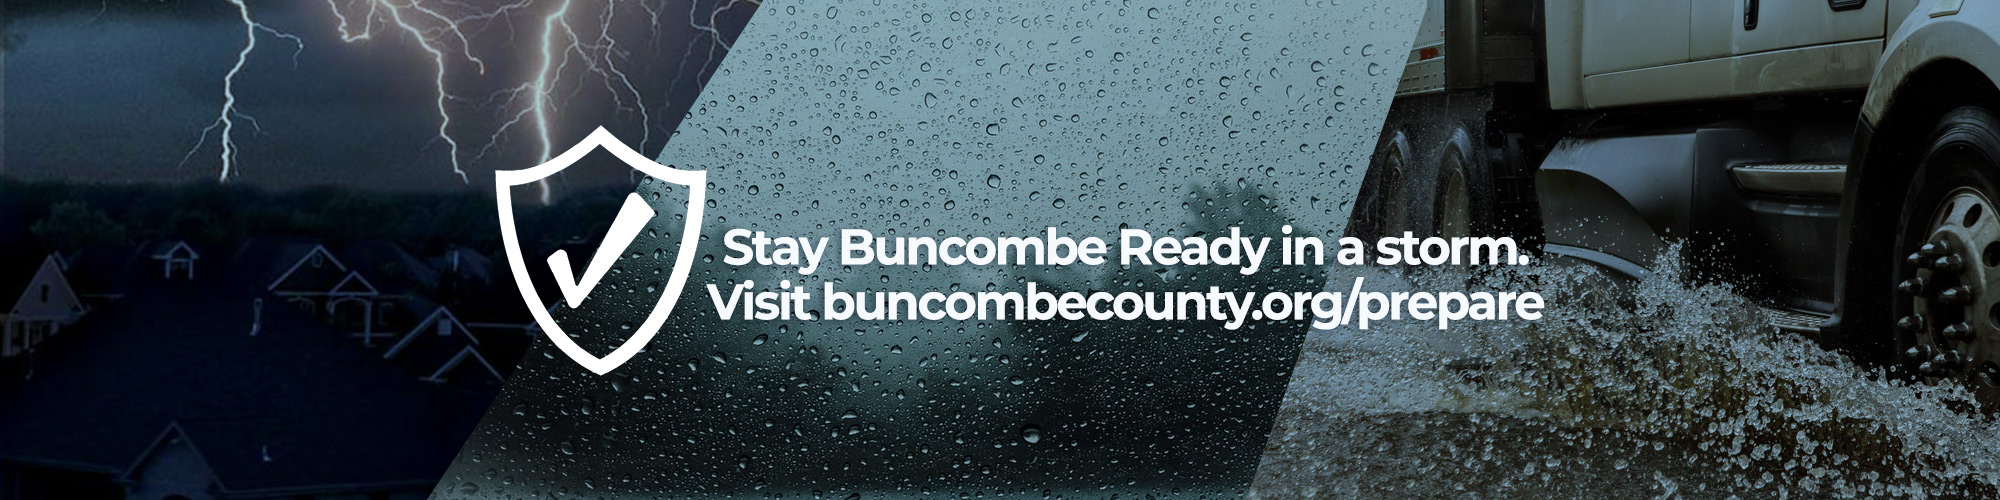 Stay prepared in a storm visit buncombecounty.org/prepare